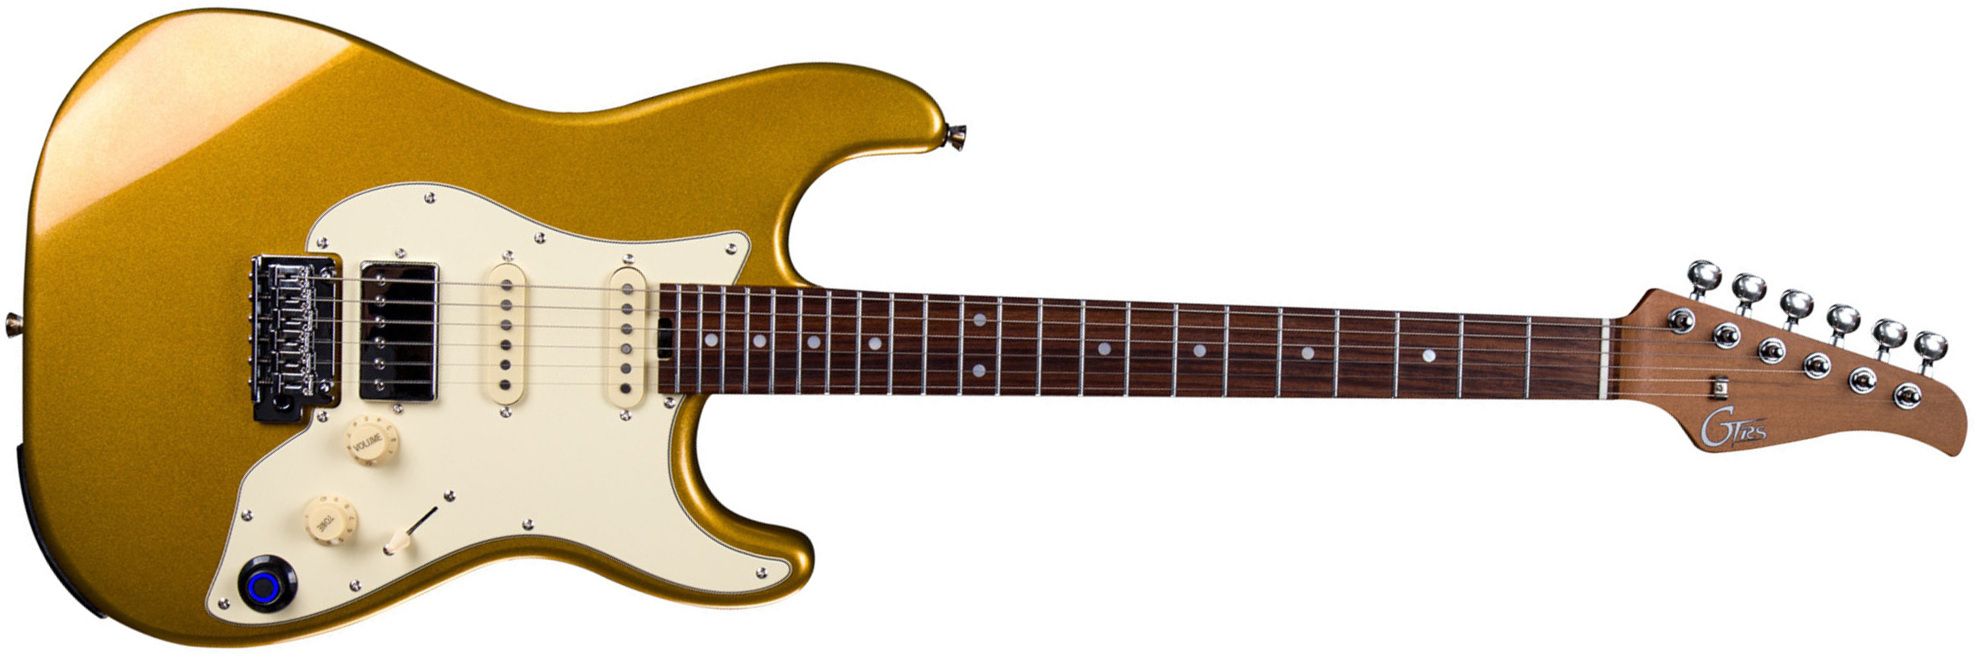 Mooer Gtrs S800 Hss Trem Rw - Gold - Guitarra eléctrica de modelización - Main picture